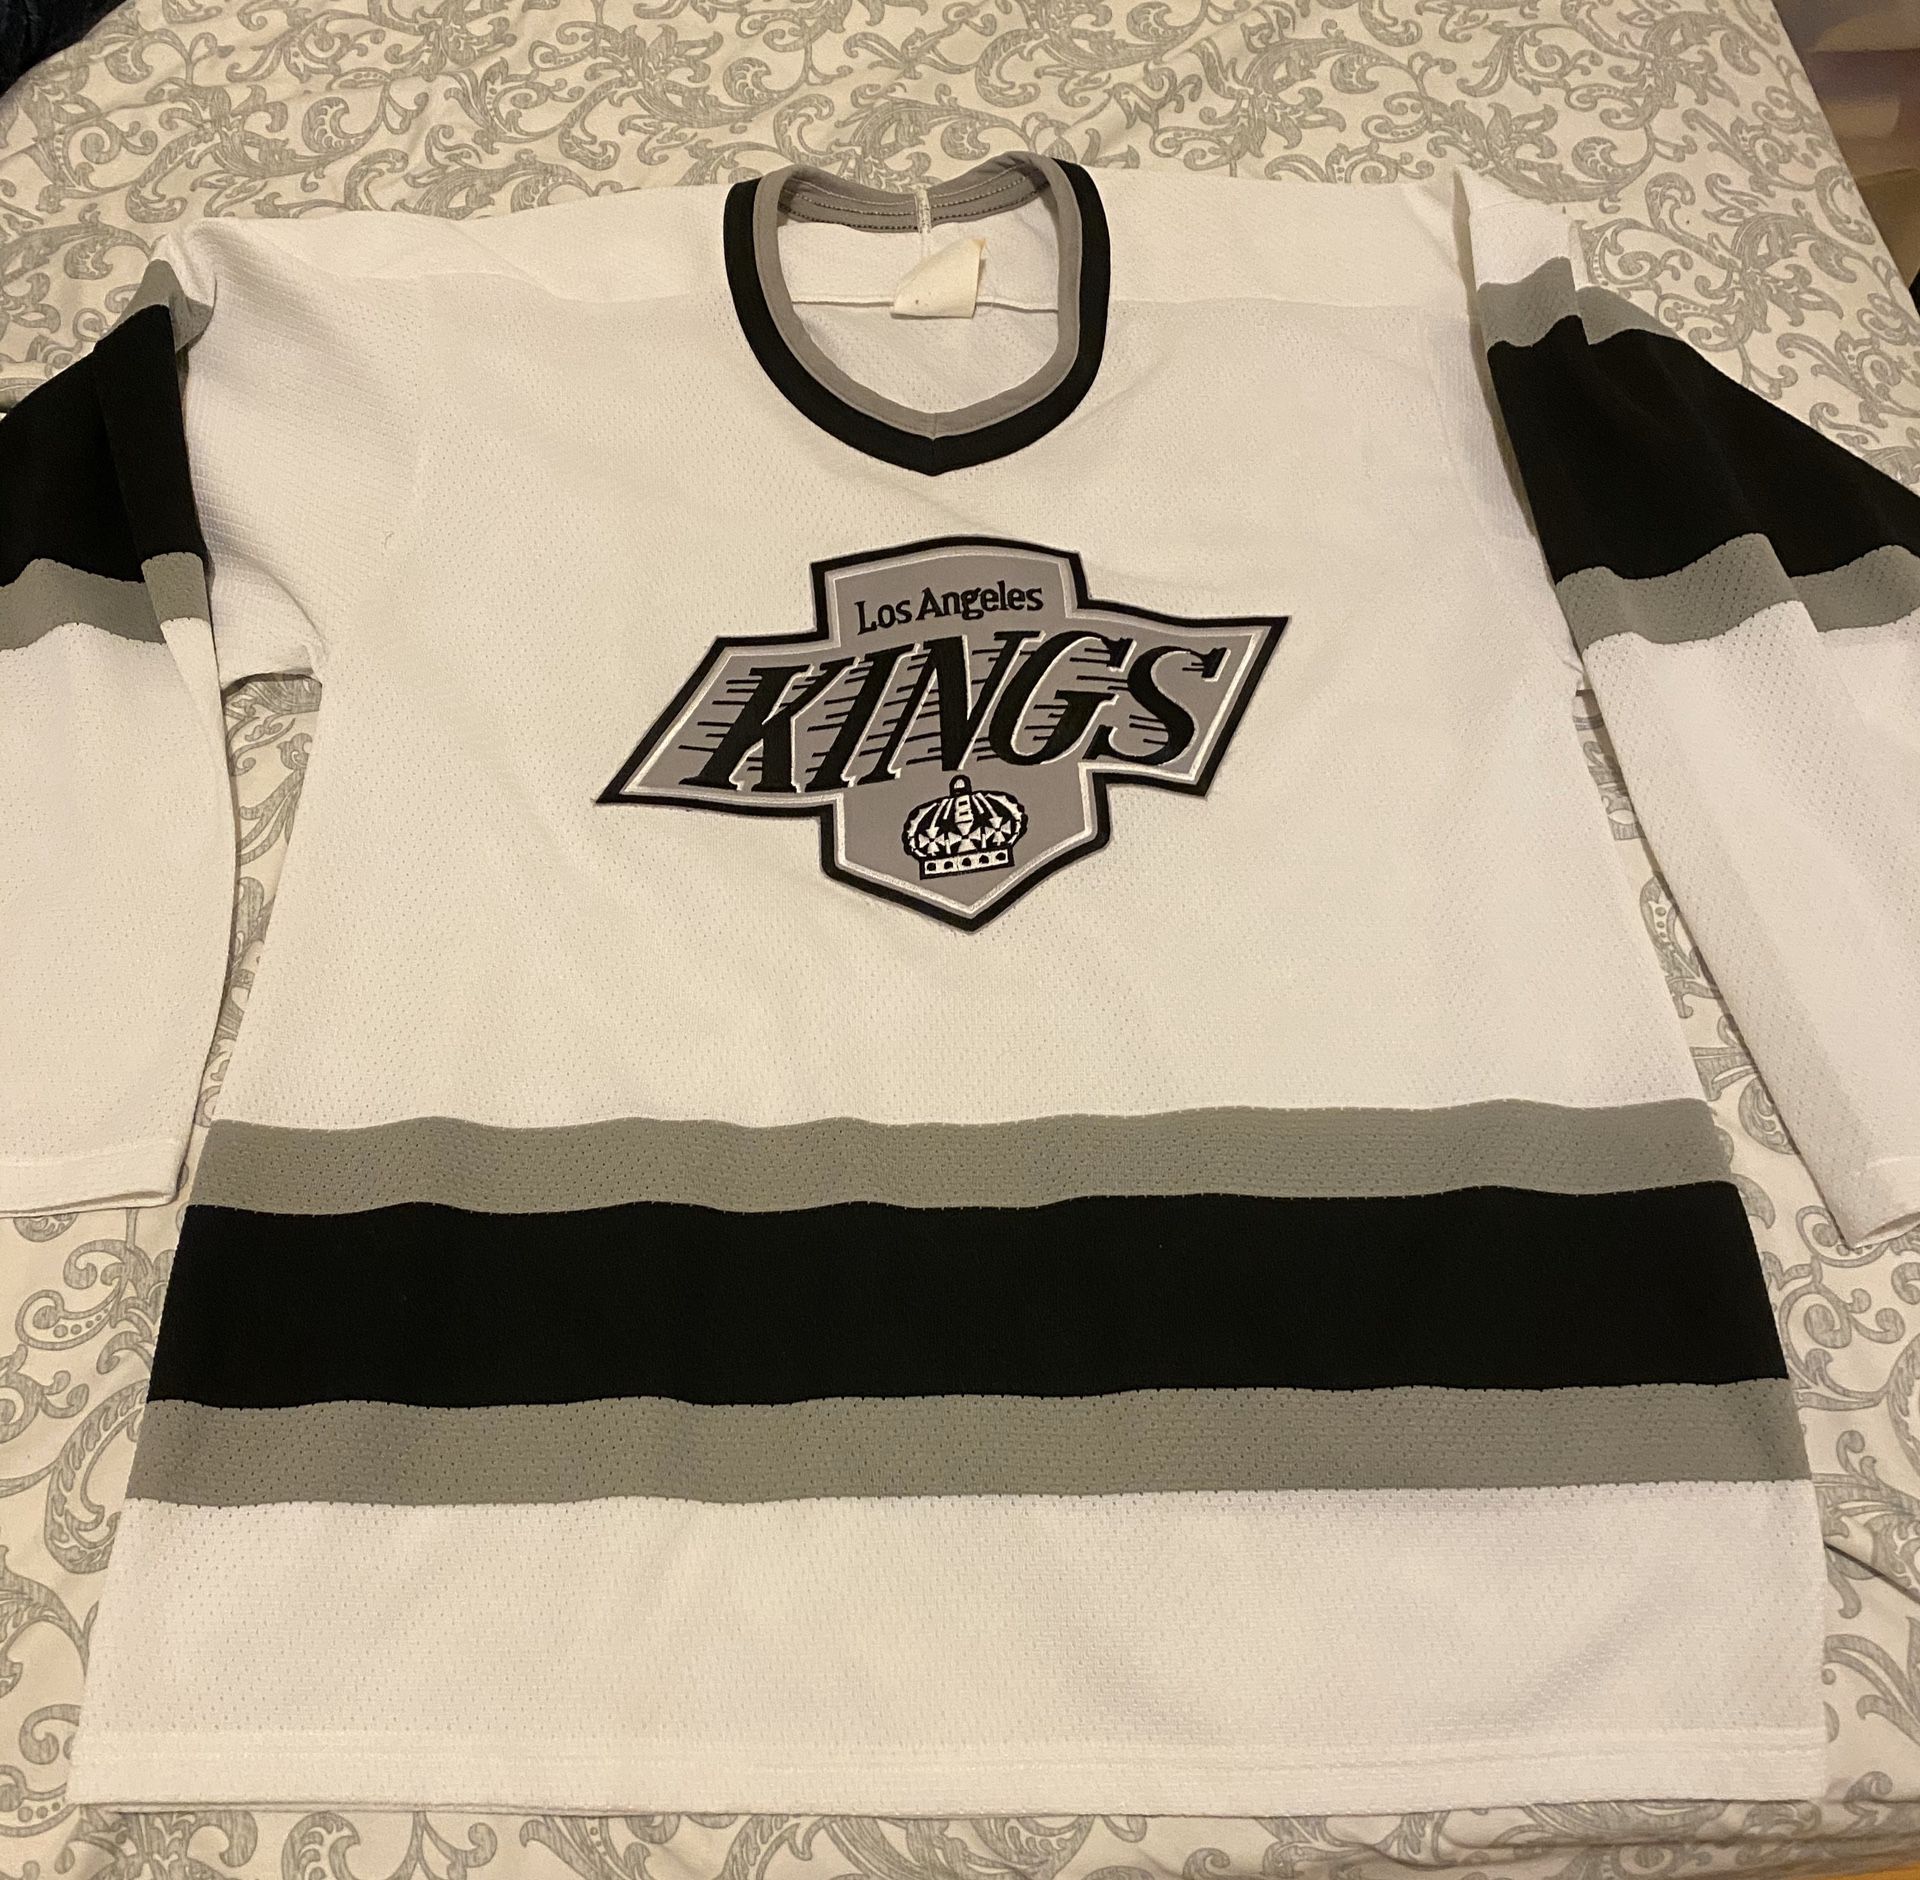 Los Angeles Kings jersey